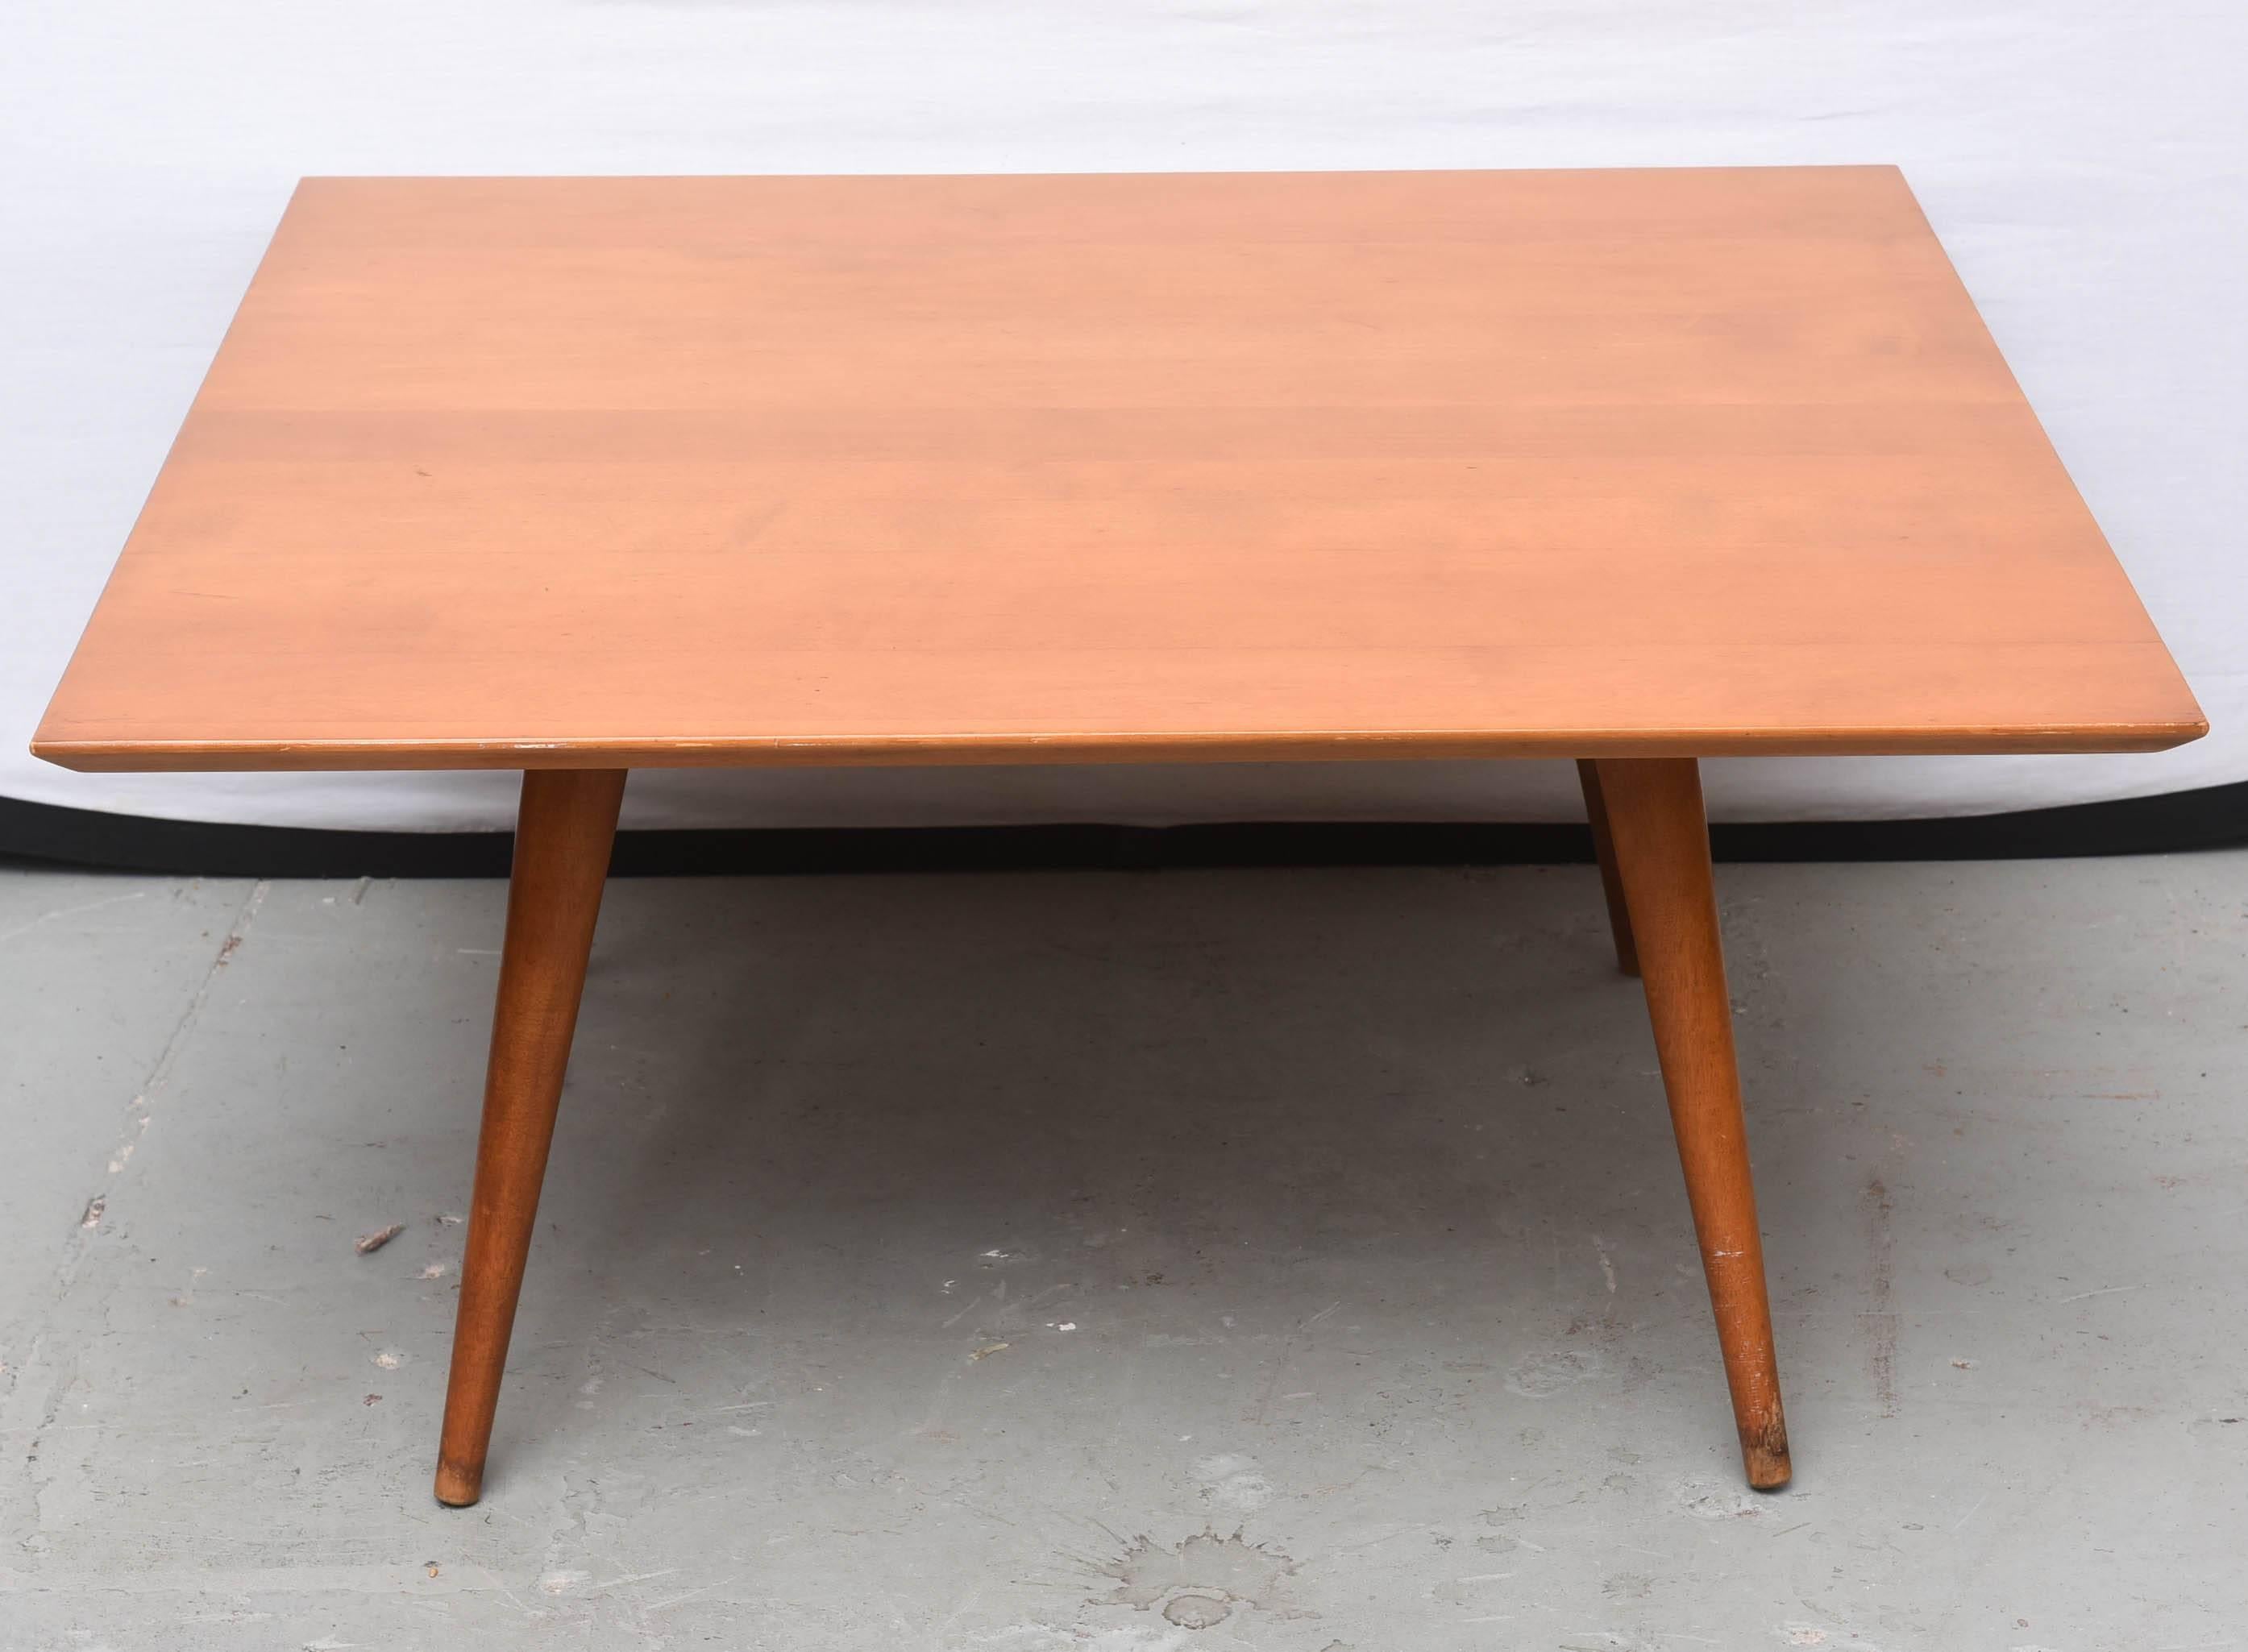 Beautiful original condition coffee table by Paul Mc Cobb.